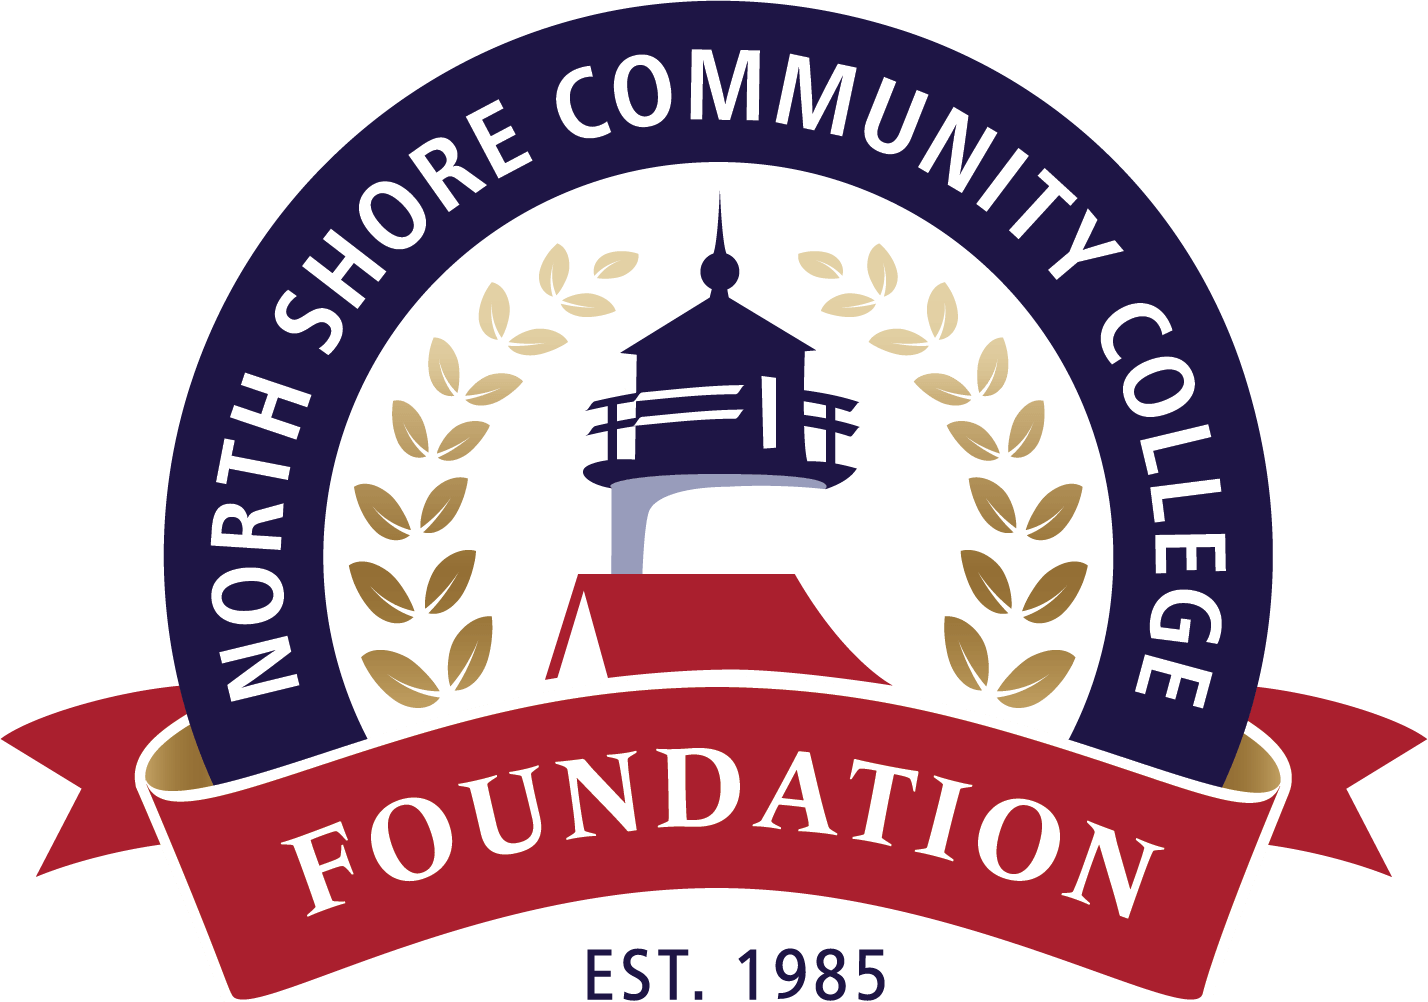 Giving North Shore Community College 